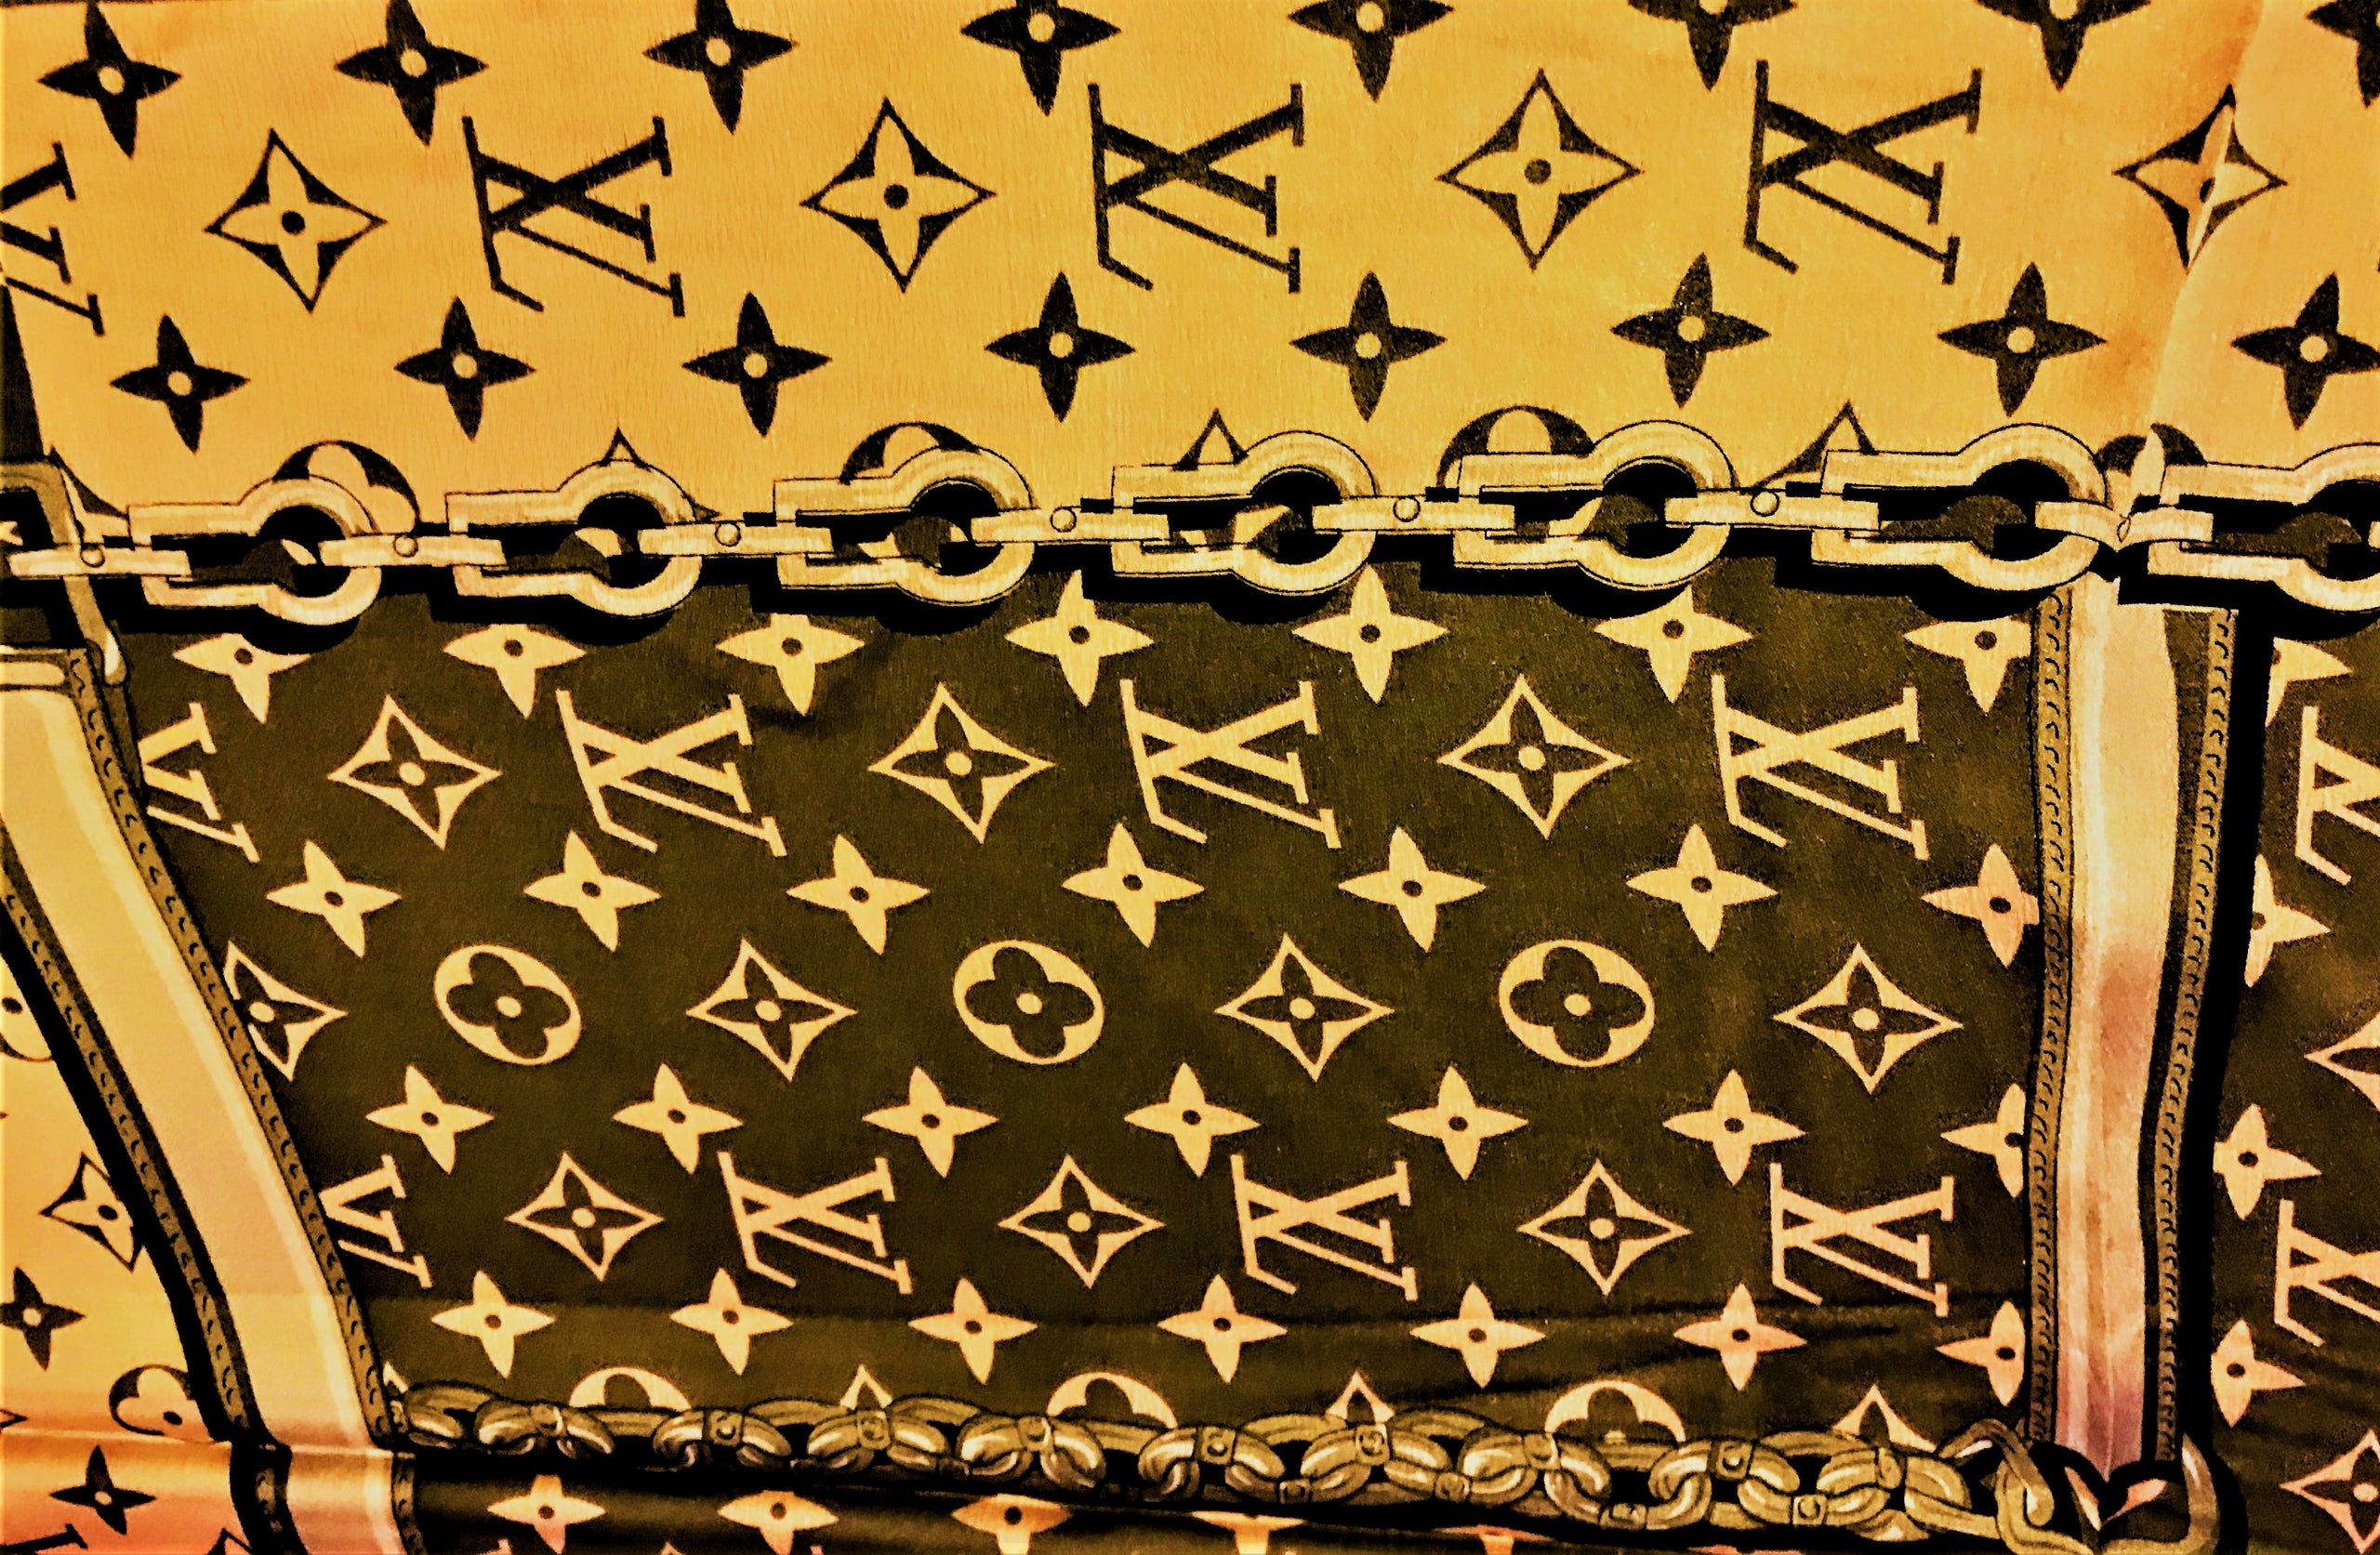 Buy Louis Vuitton Monogram Confidential Square Scarf (Brown) at